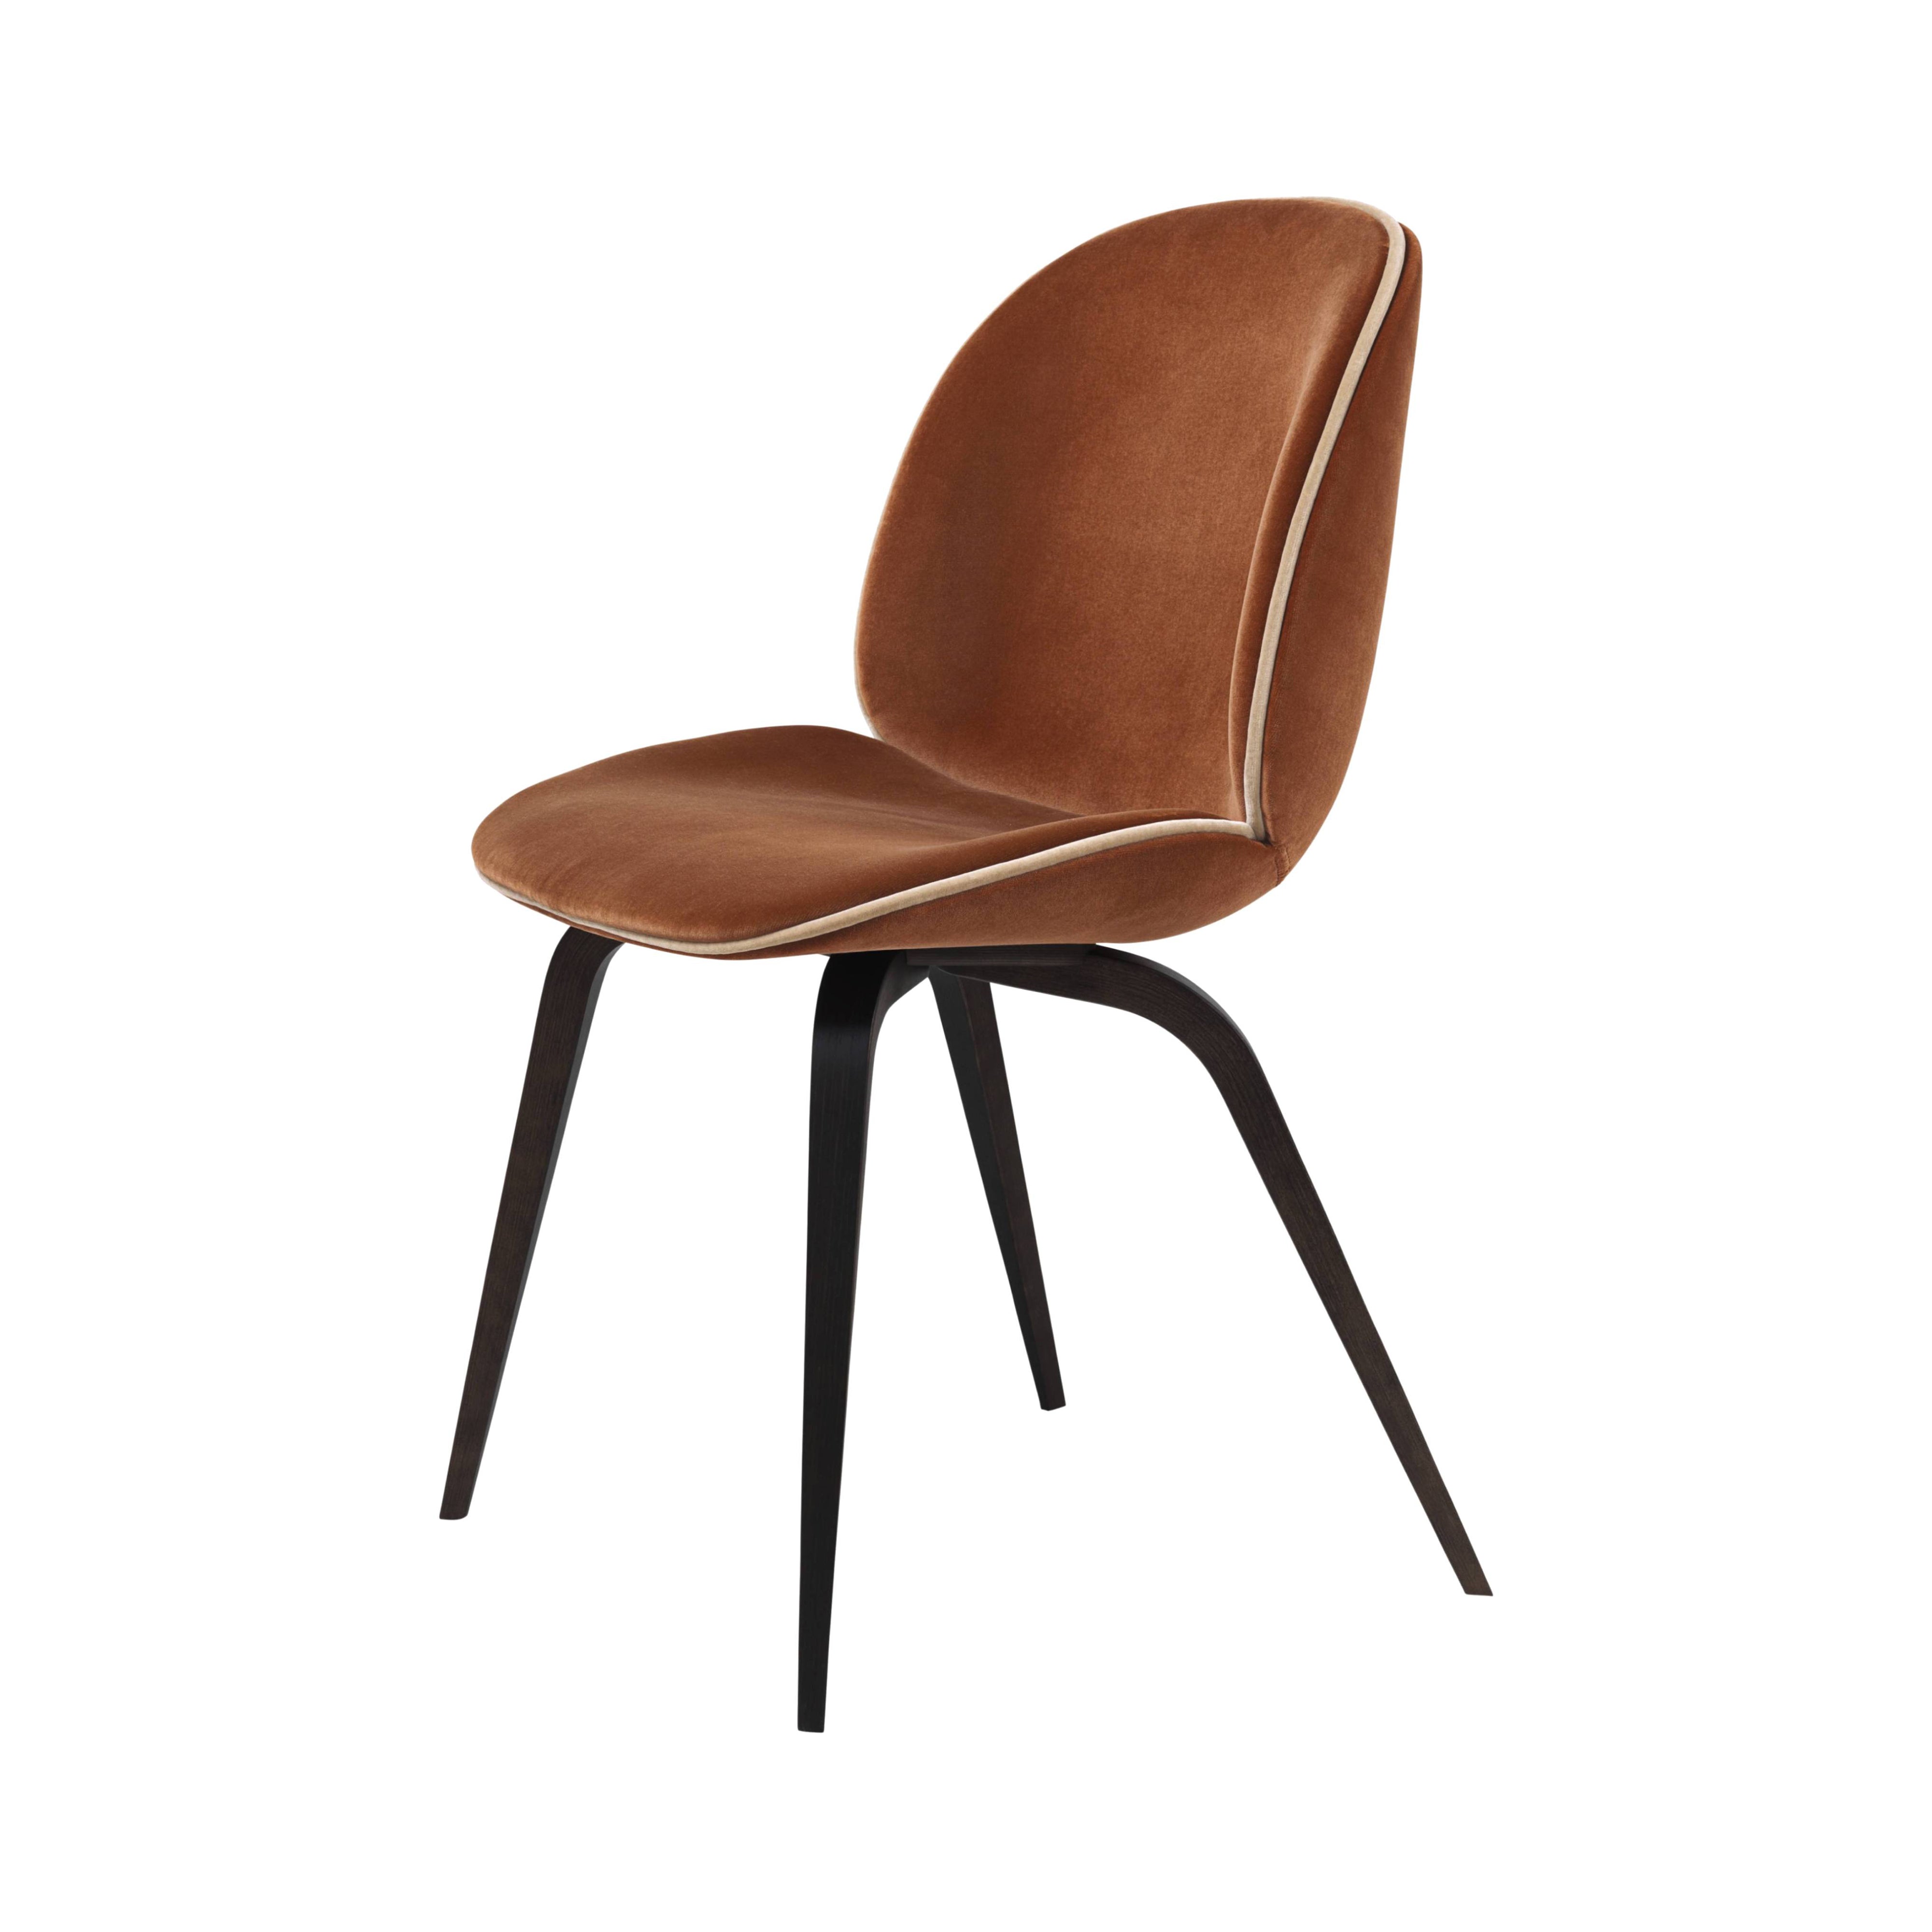 Beetle Dining Chair: Wood Base + Full Upholstery + Smoked Oak Matt